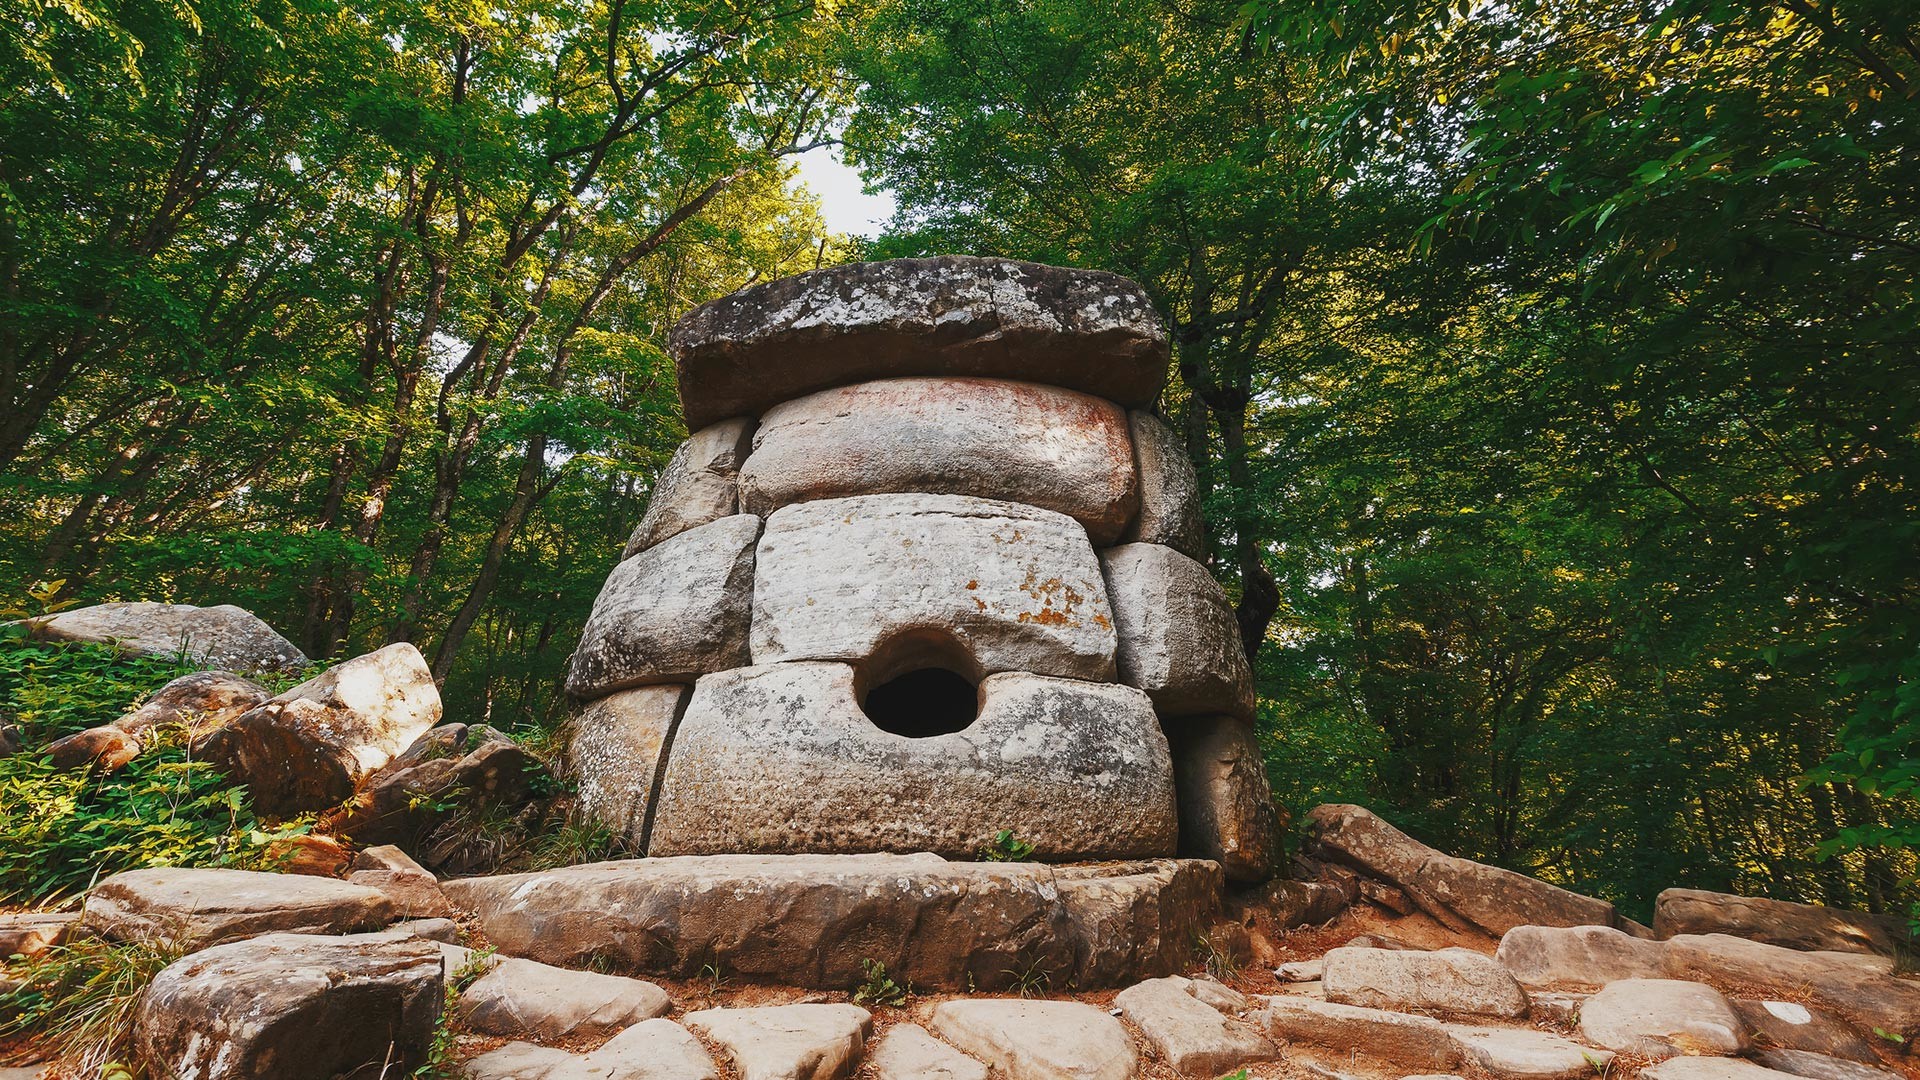 Sebuah dolmen di dekat Sungai Zhane, Krasnodarsky krai, Rusia.